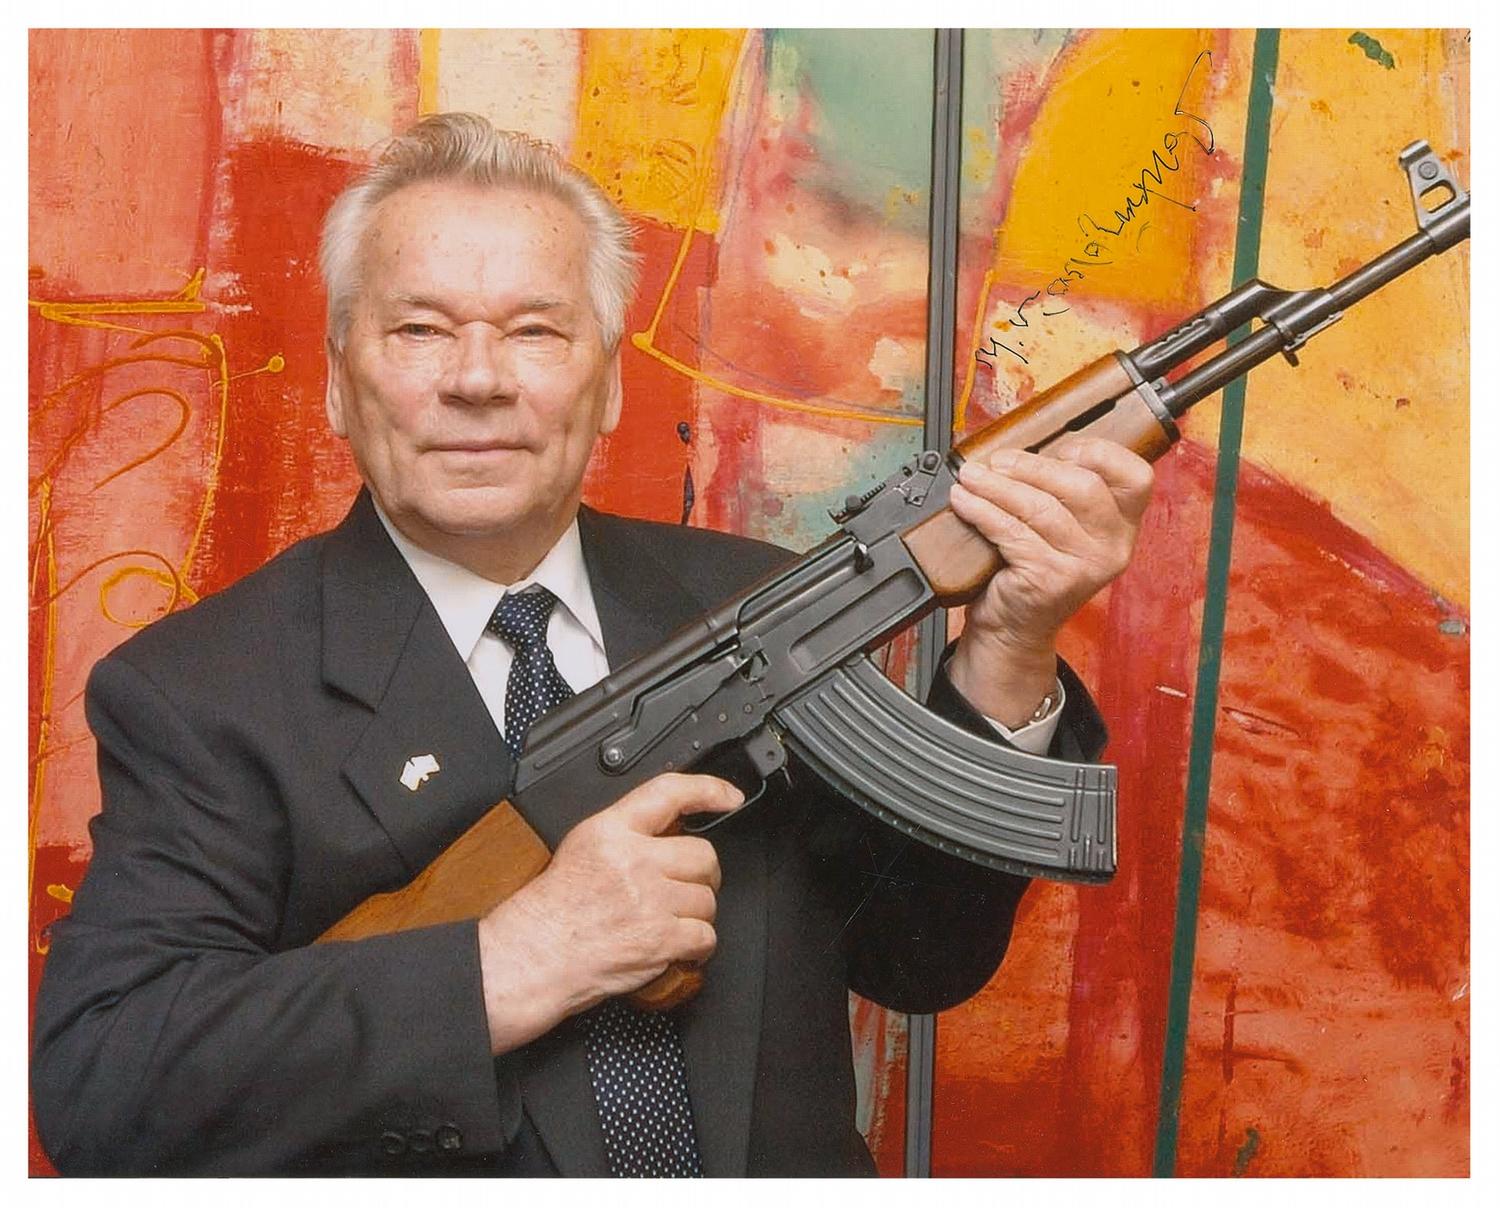 Mijaíl Kaláshnikov inventó el rifle AK-47 pero lamenta su mal uso